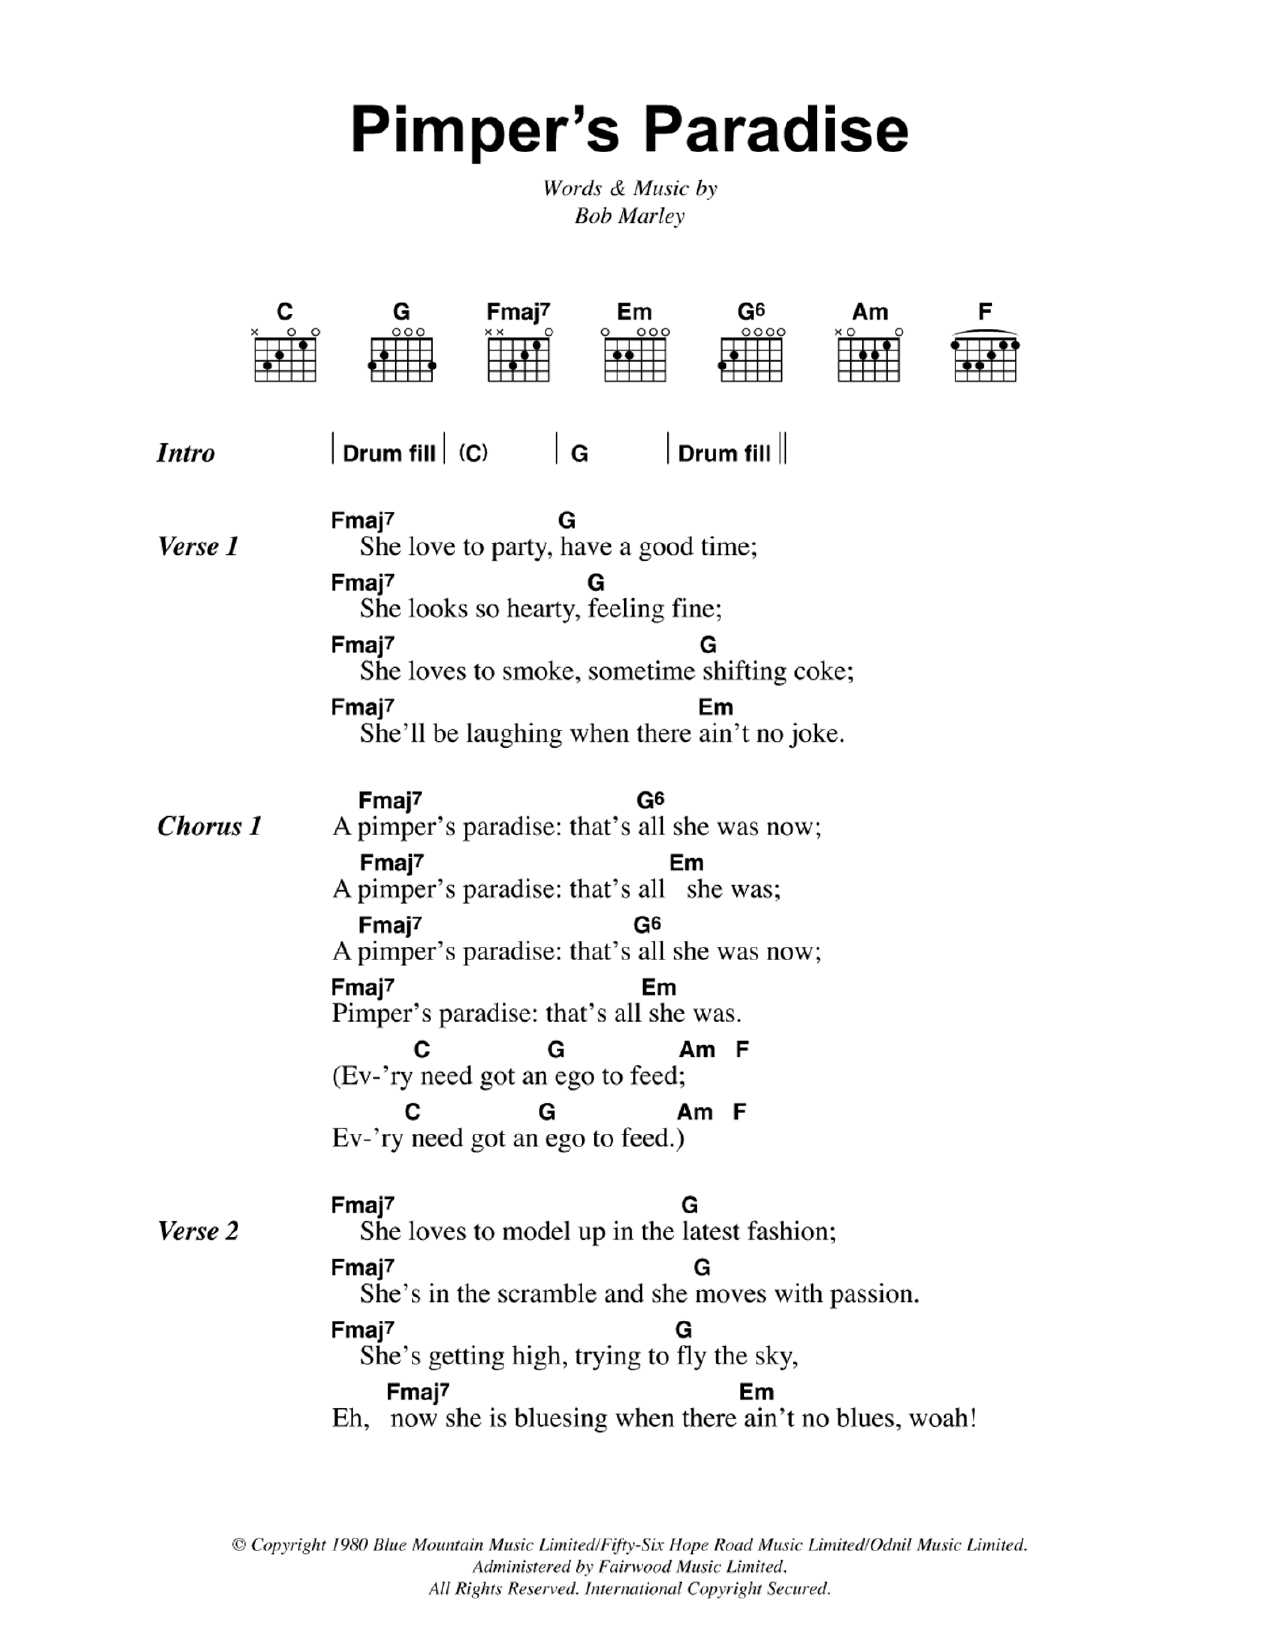 Bob Marley Pimper's Paradise Sheet Music Notes & Chords for Lyrics & Chords - Download or Print PDF